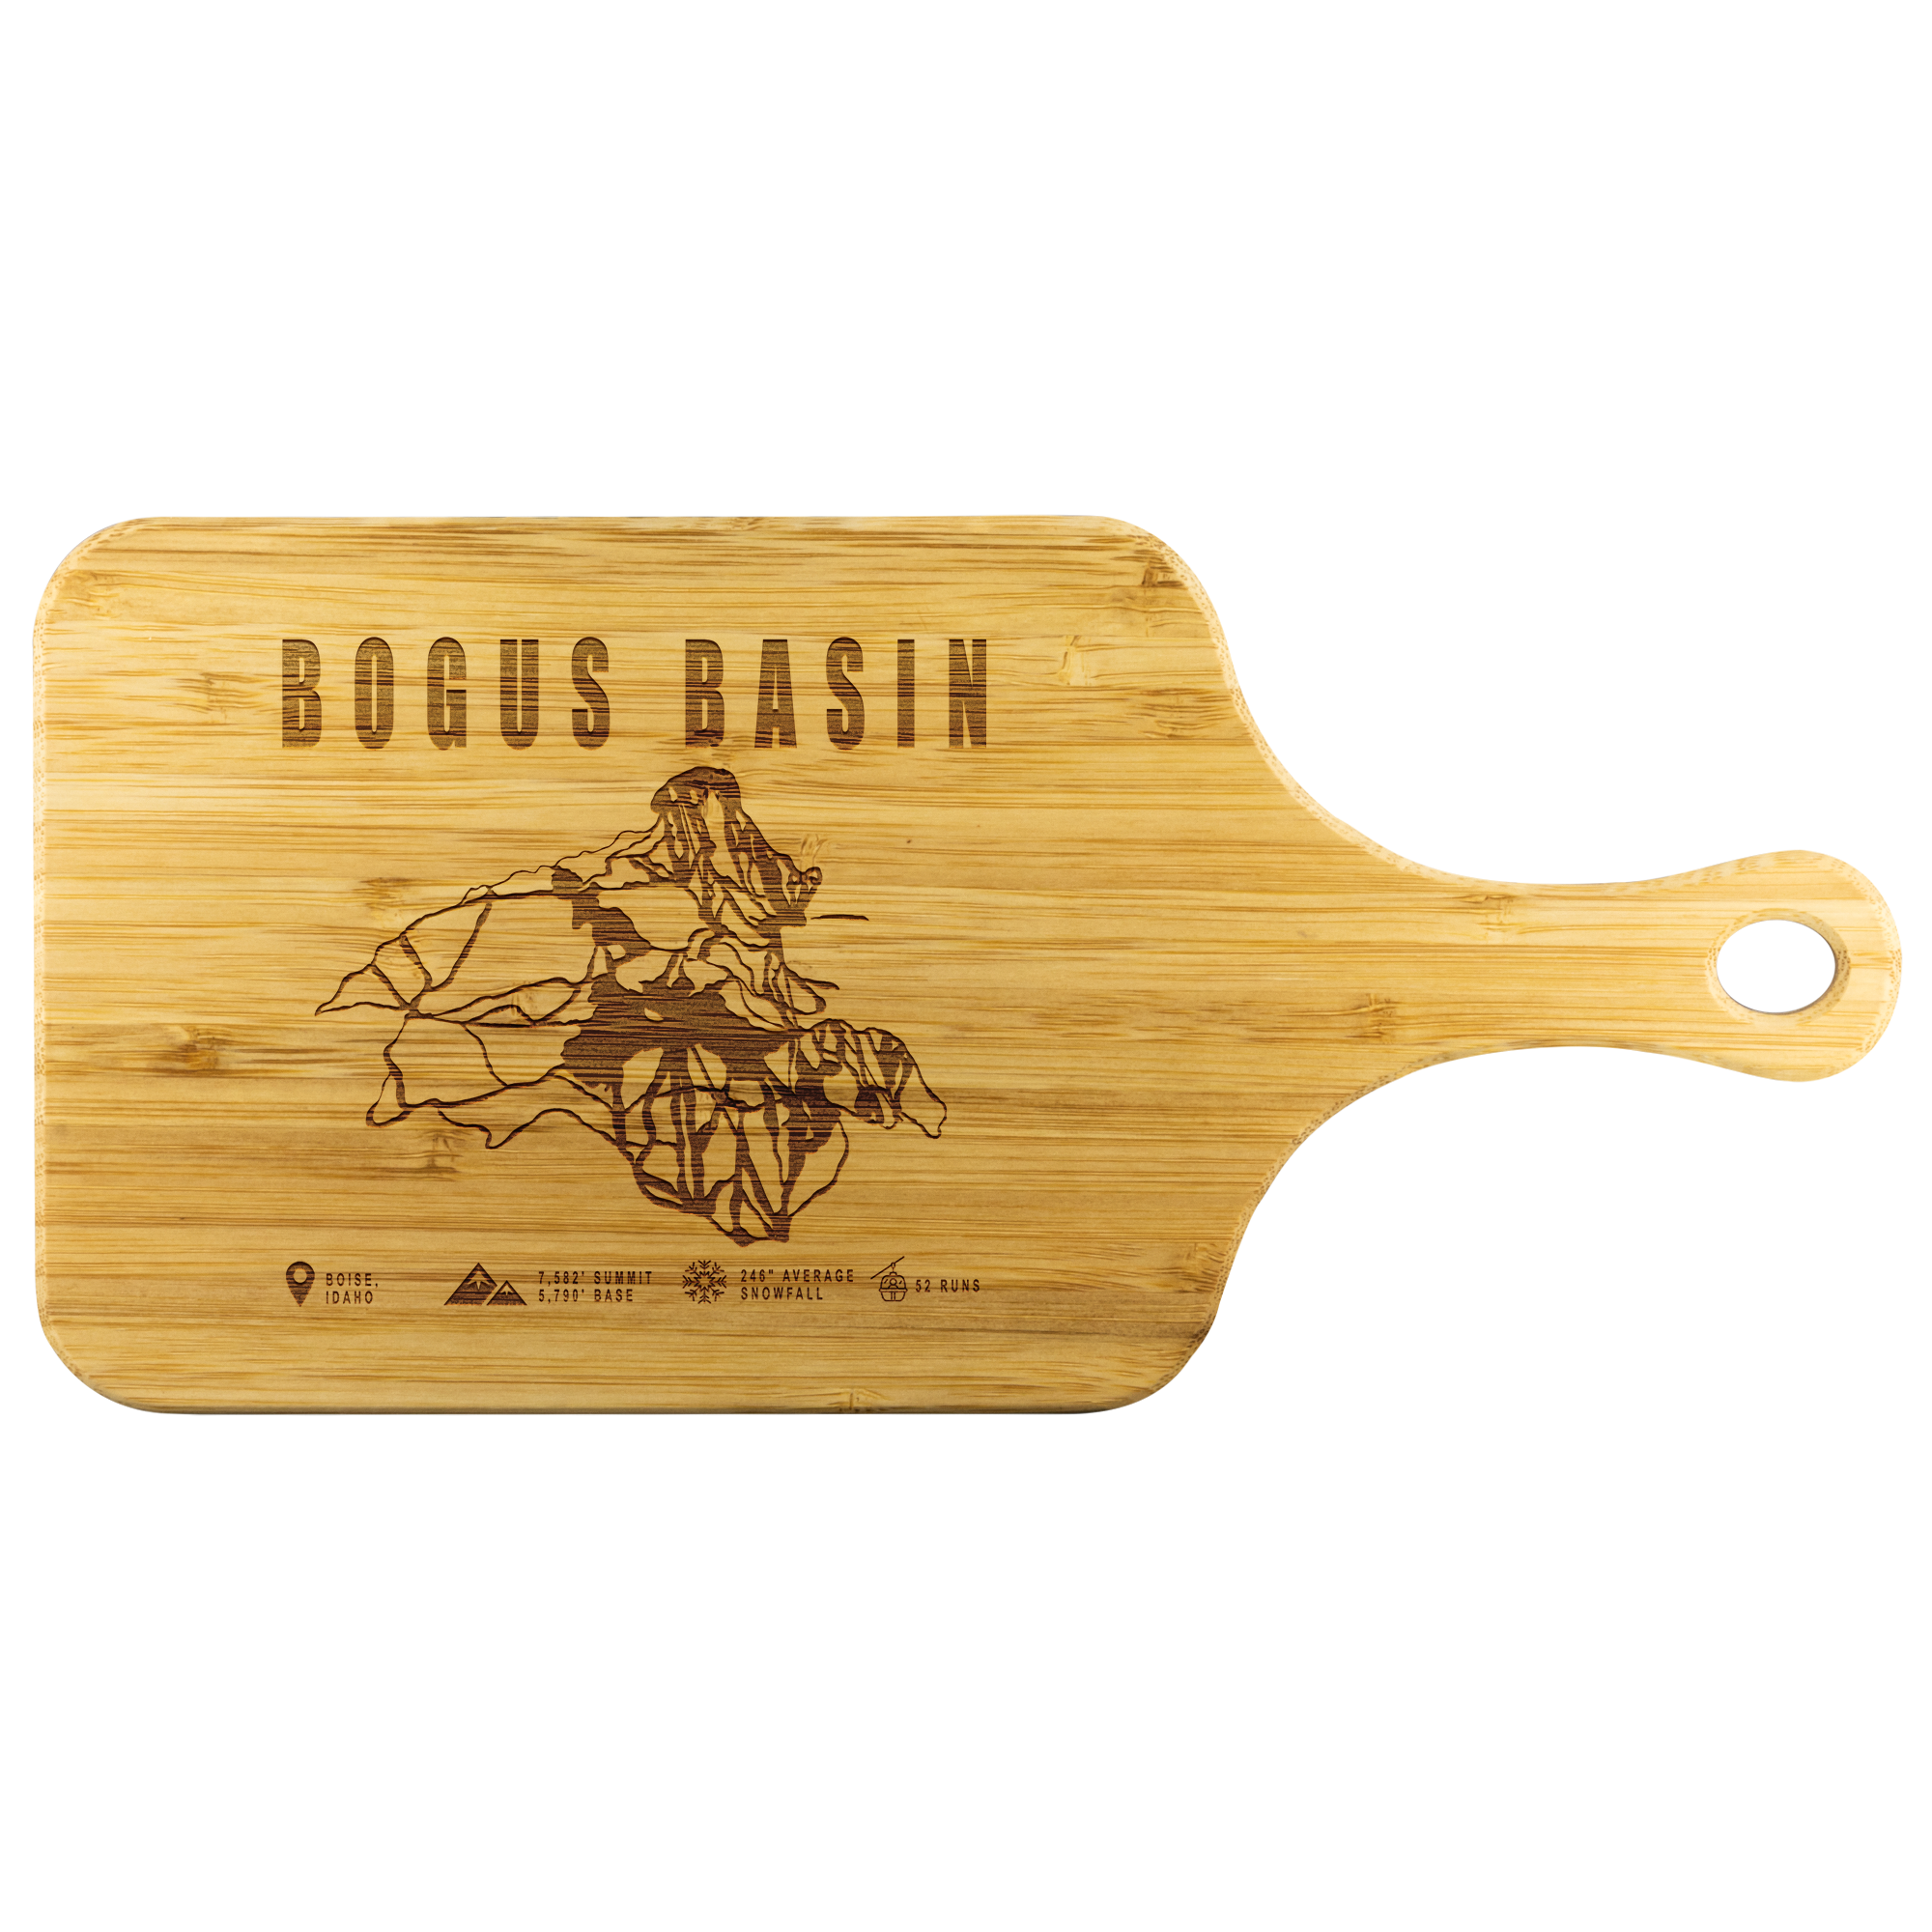 Bogus Basin Idaho Ski Trail Map Bamboo Cutting Board With Handle - Powderaddicts